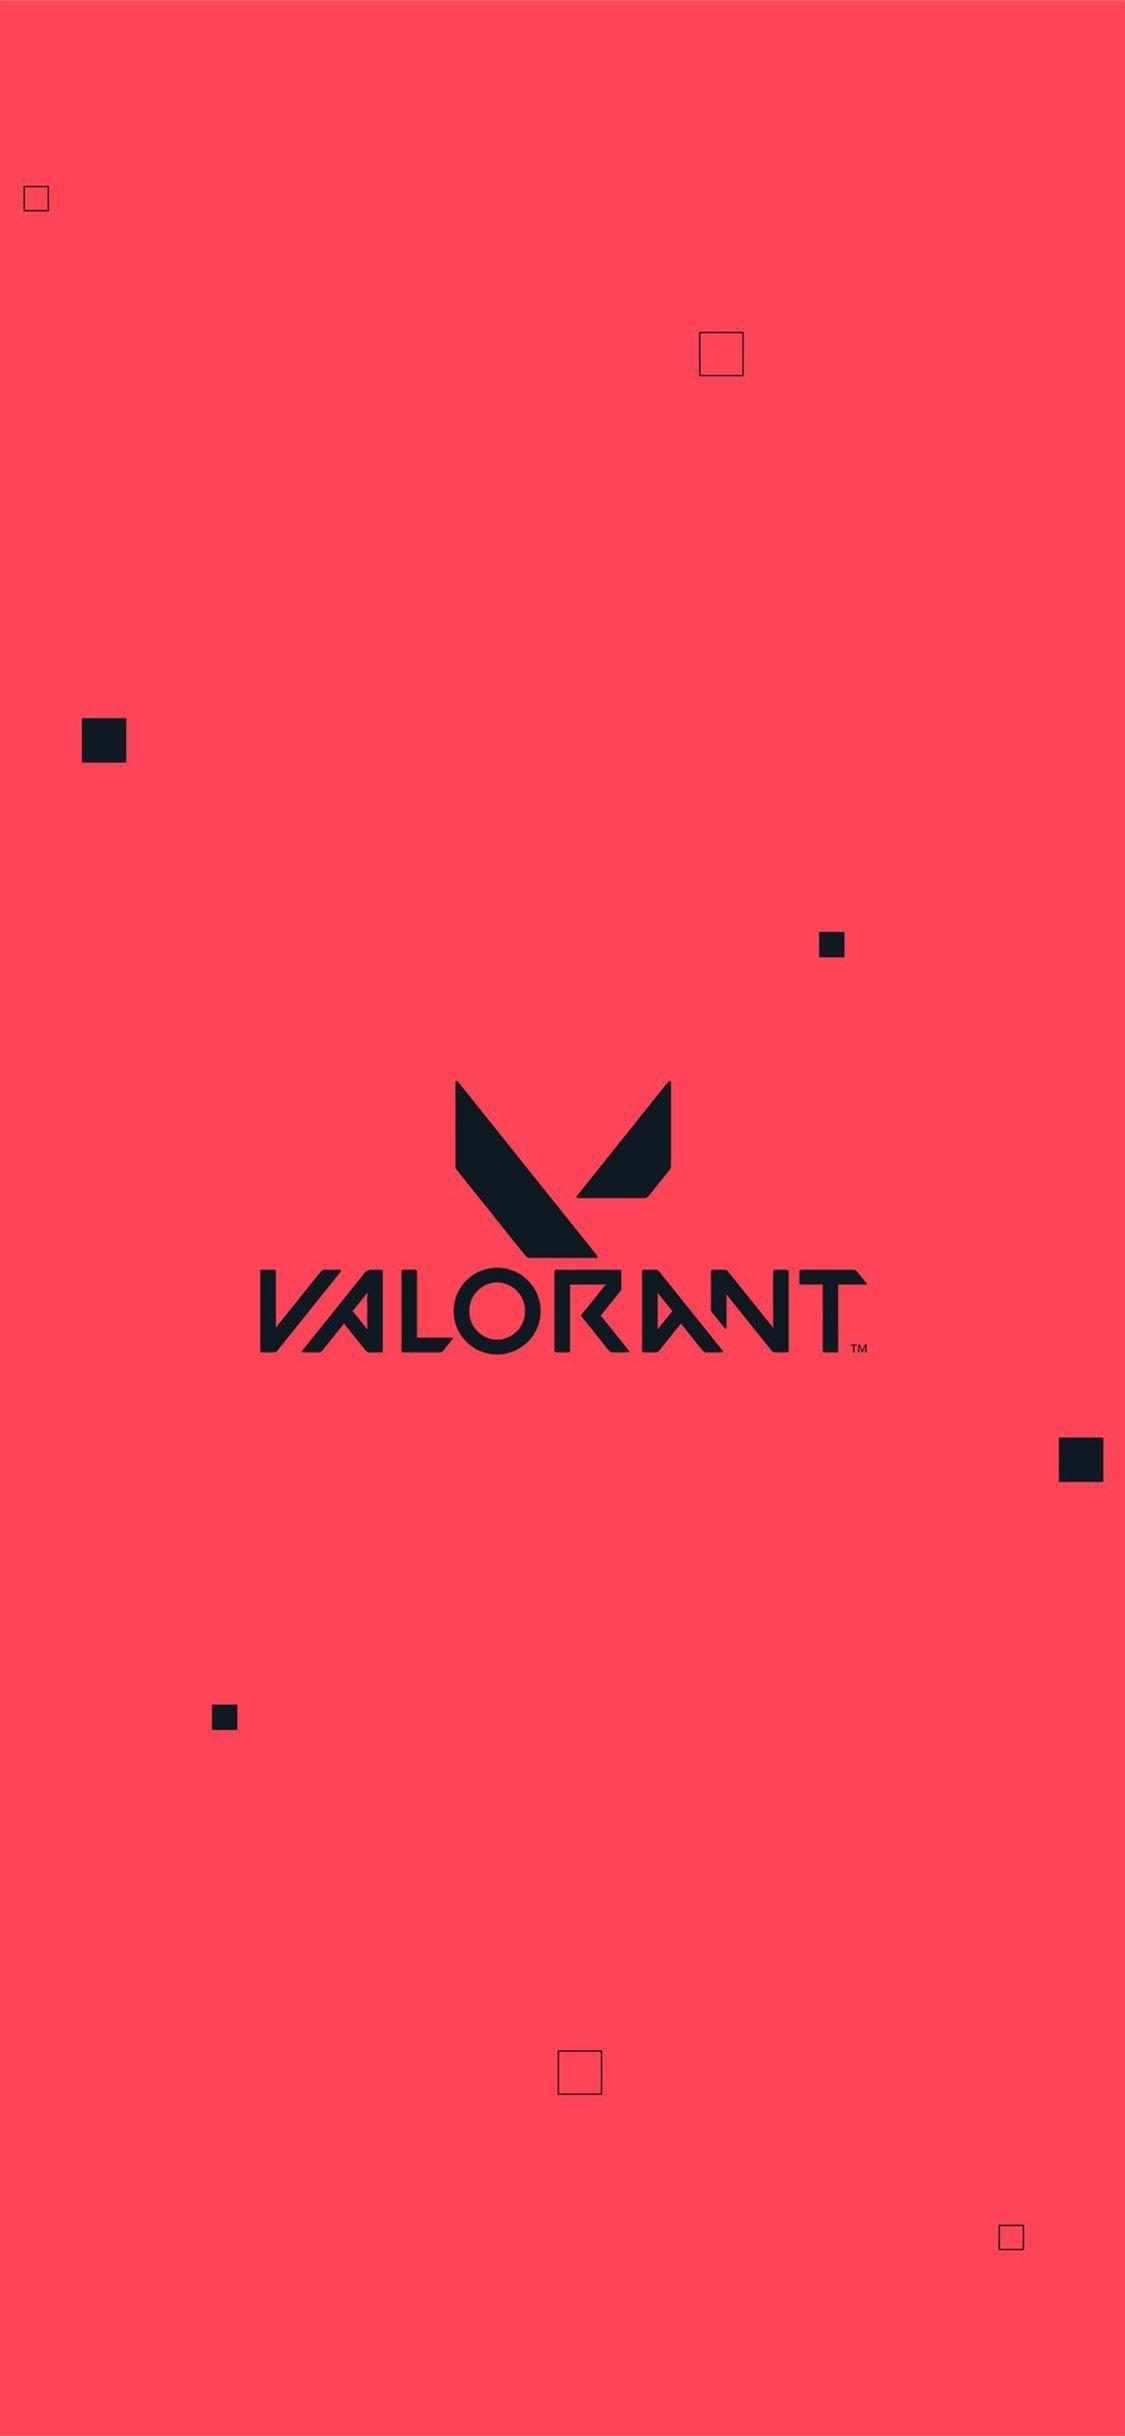 valorant warrior game 4k #Valorant #games #4k #2020Games #iPhoneXWallpaper